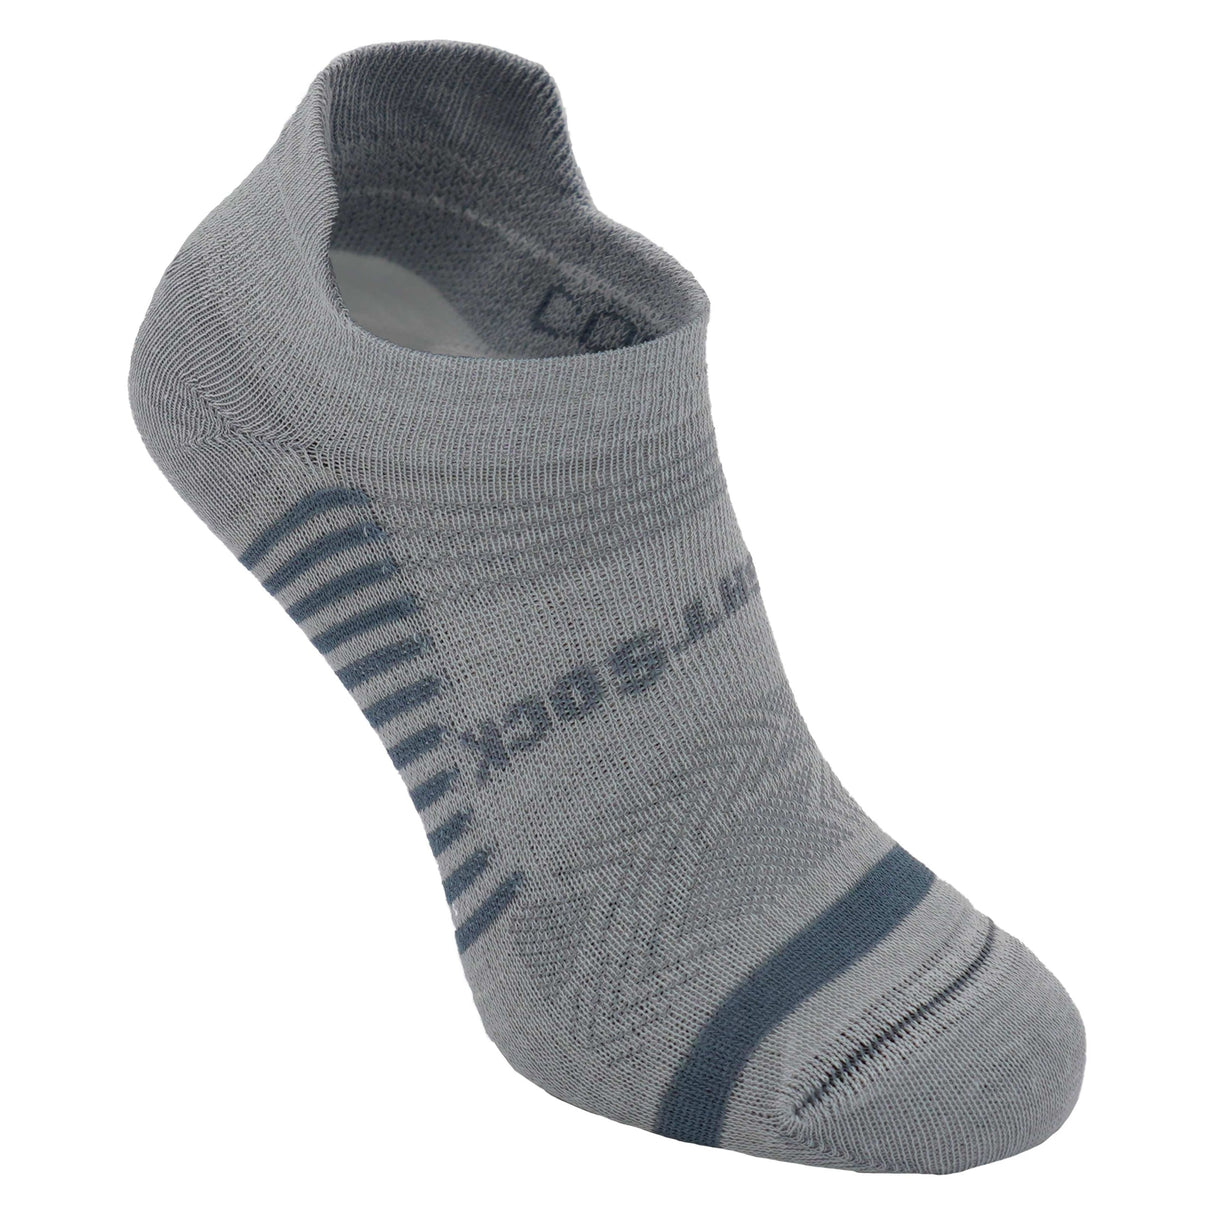 Wrightsock Coolmesh II Tab Socks  -  Small / Cloud Grey / Single Pair